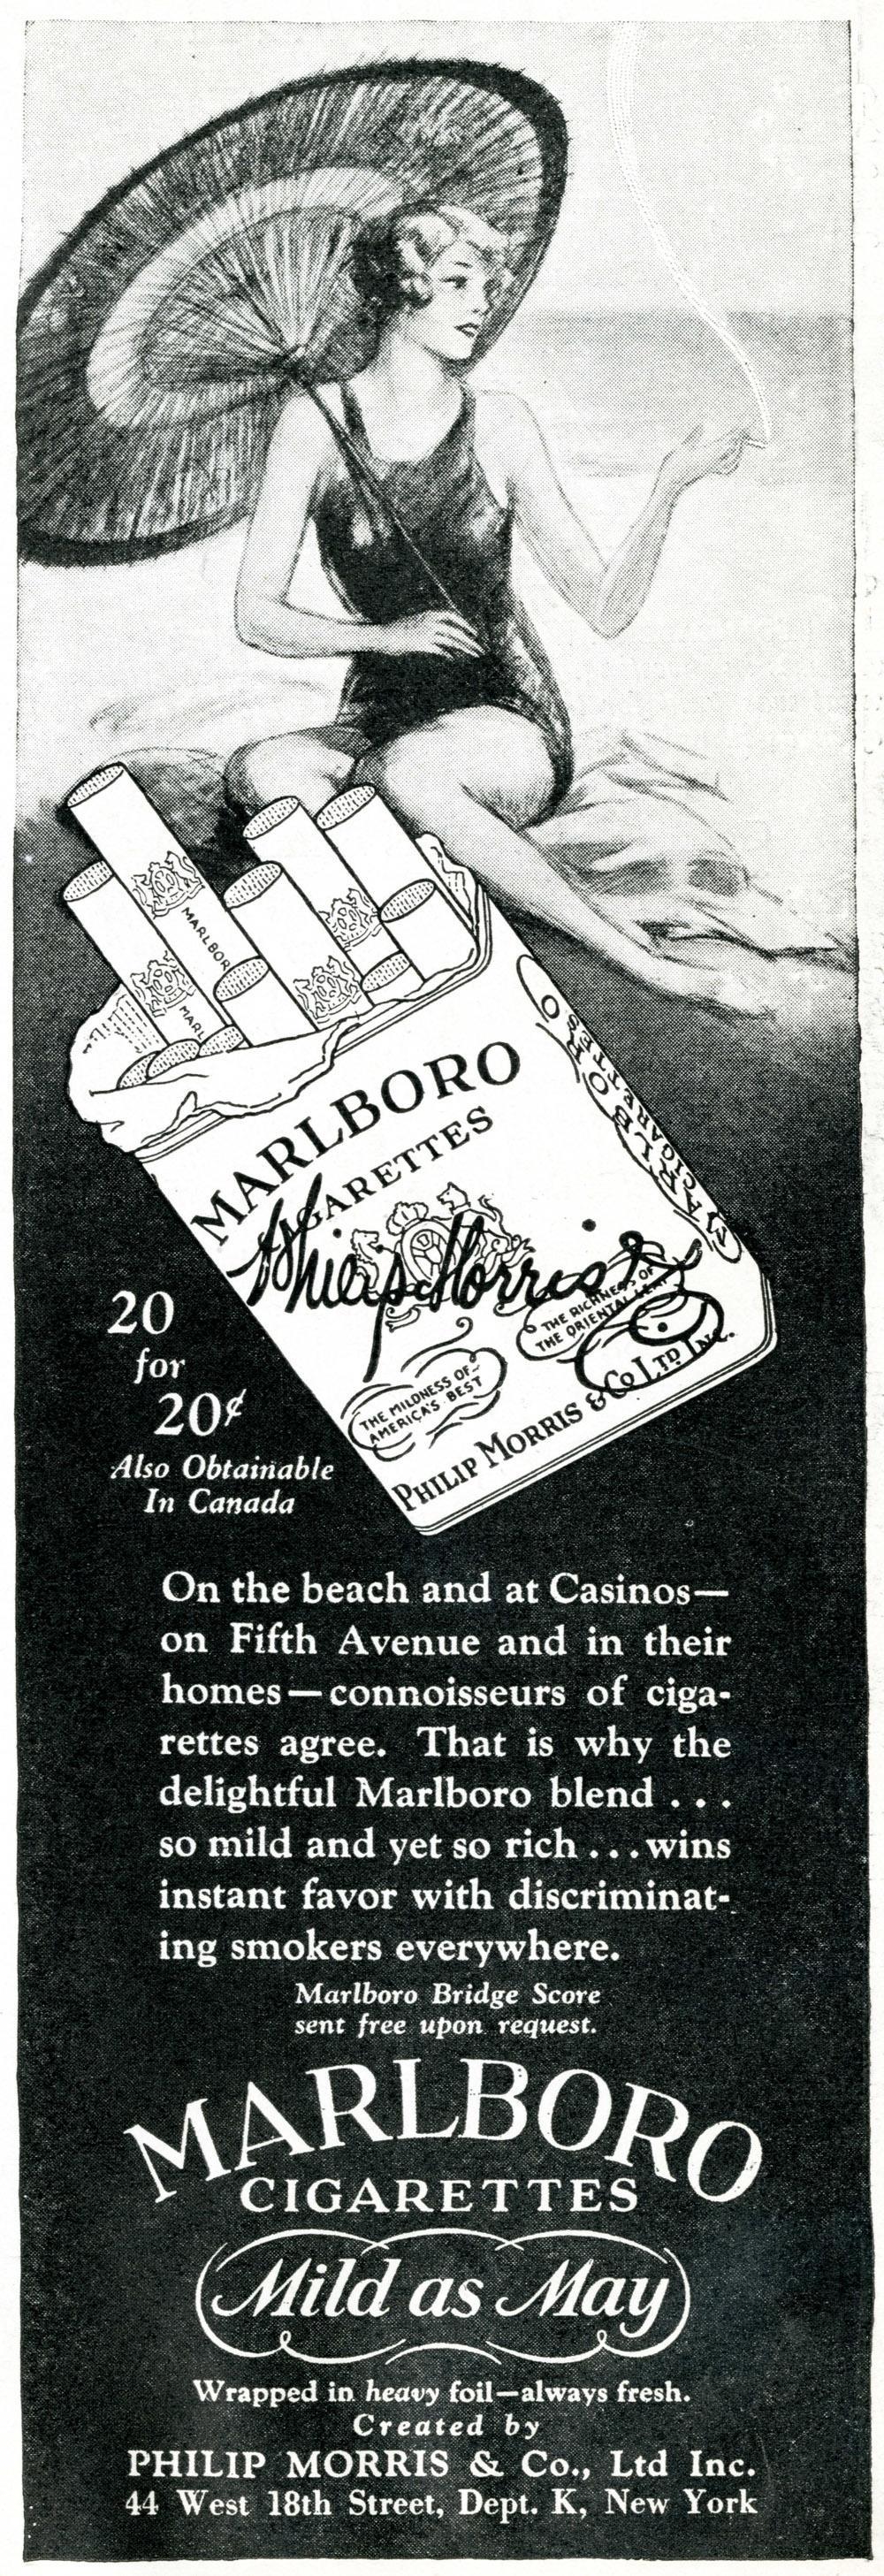 Philip Morris - Marlboro Print ad targeting women 4